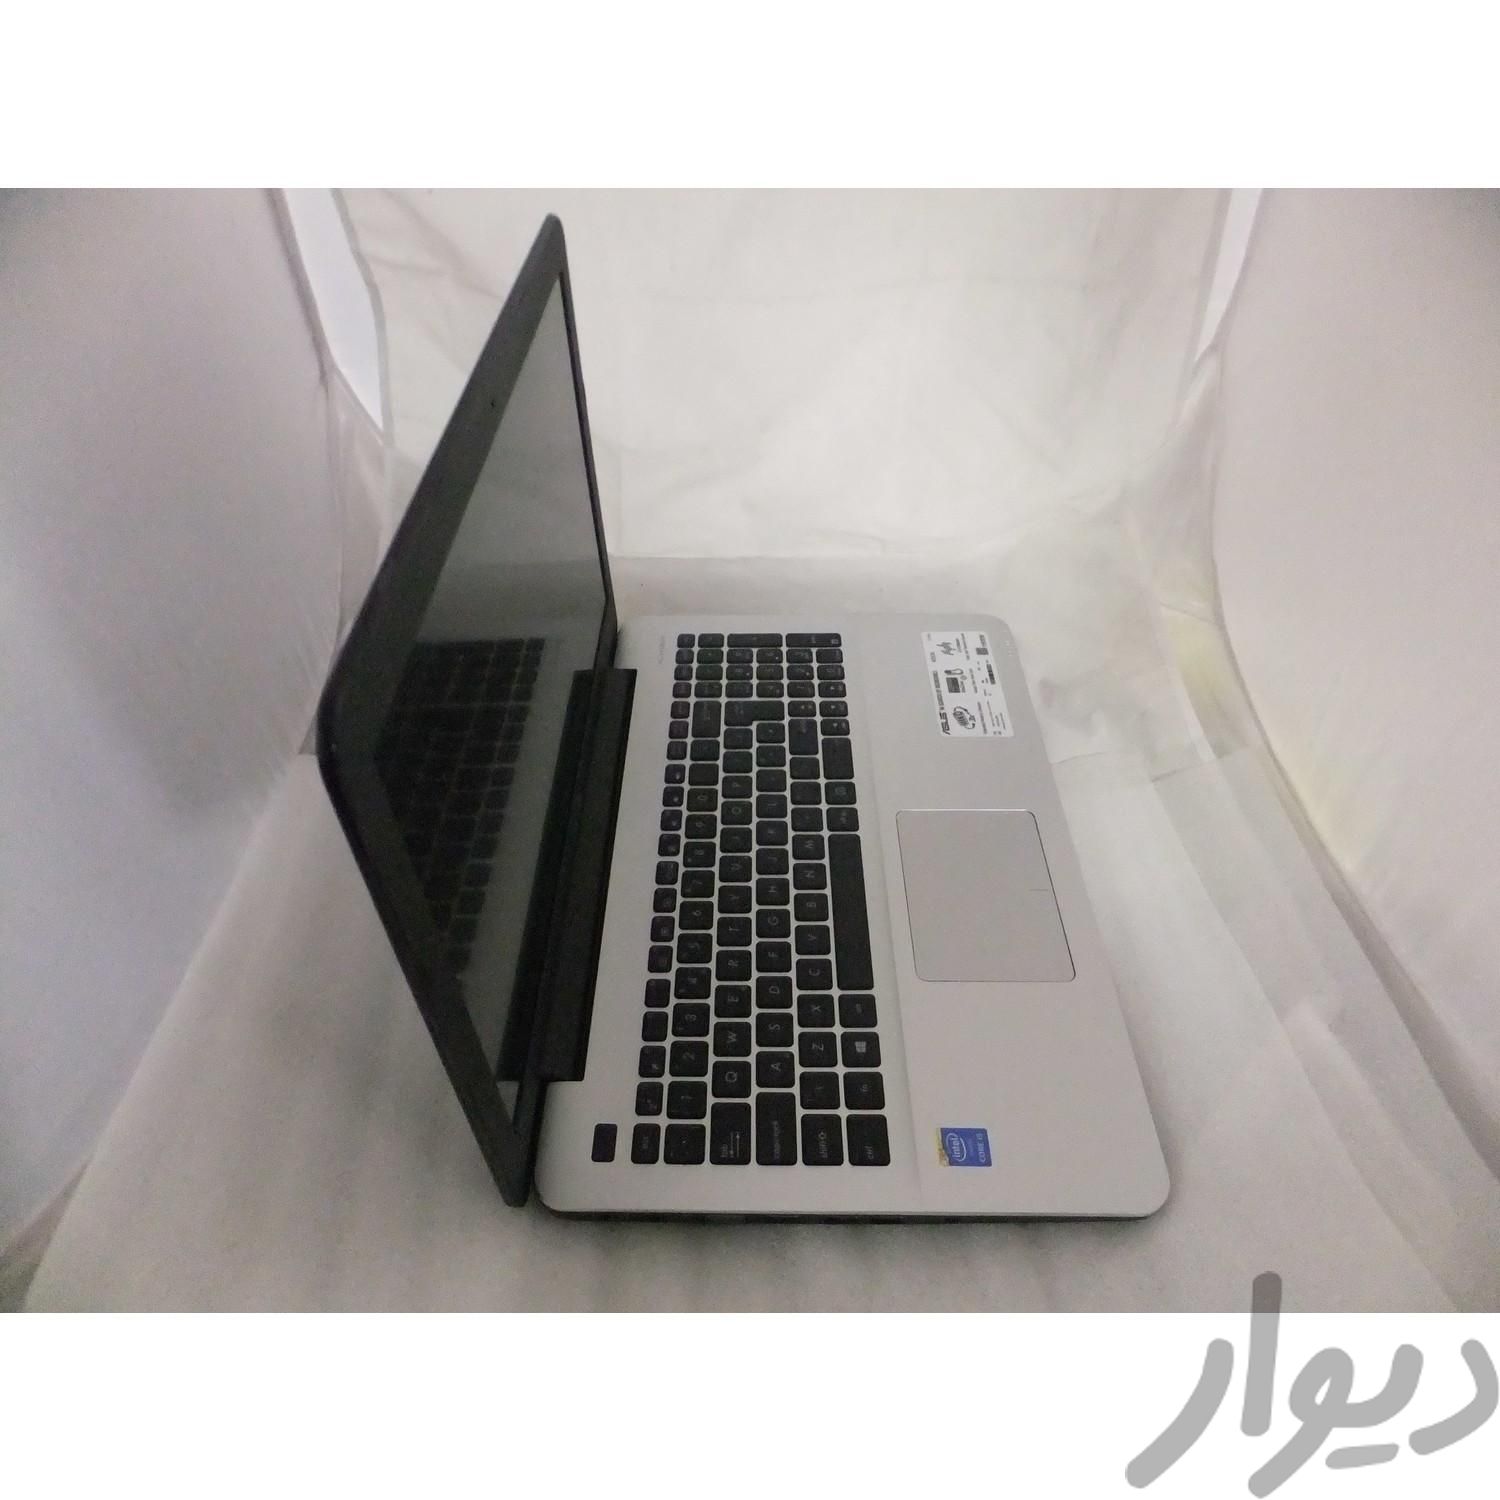 لپ تاپ گیمینگ ایسوس X555L گرافیک جیفورس|رایانه همراه|تهران, پونک|دیوار